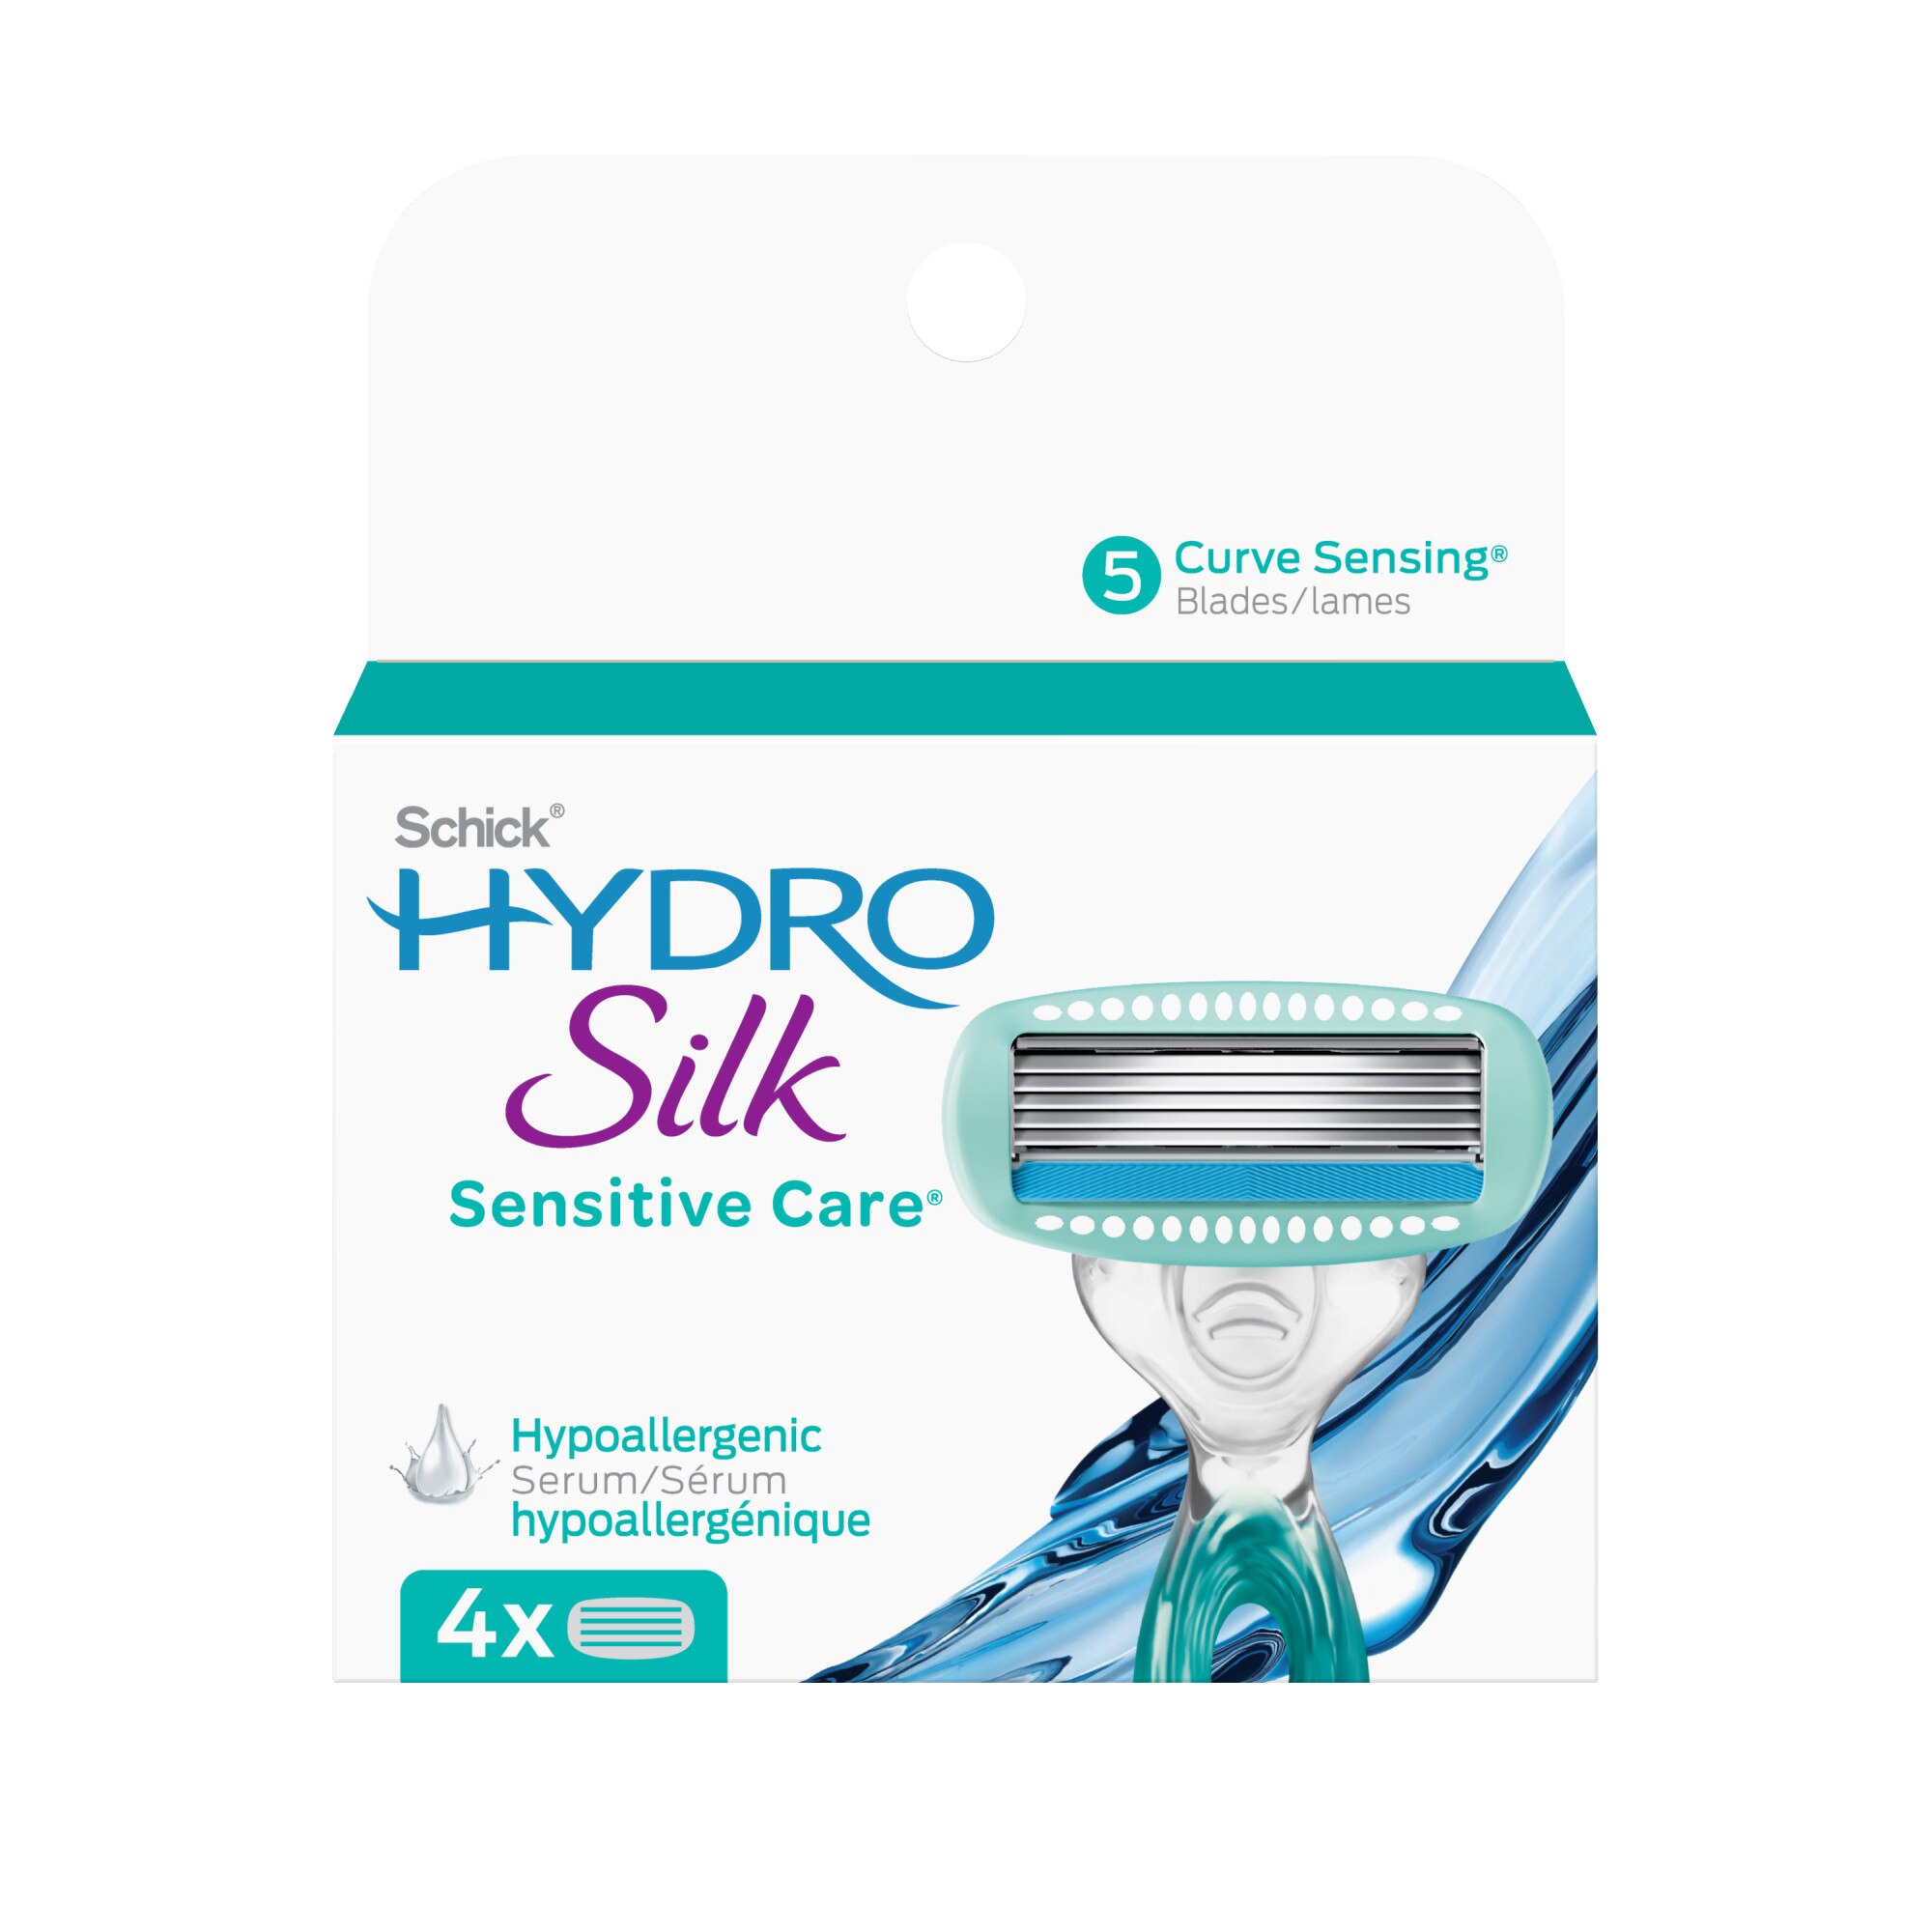 Schick Hydro Silk Sensitive Care 5-Blade Razor Blade Refills, 4 CT